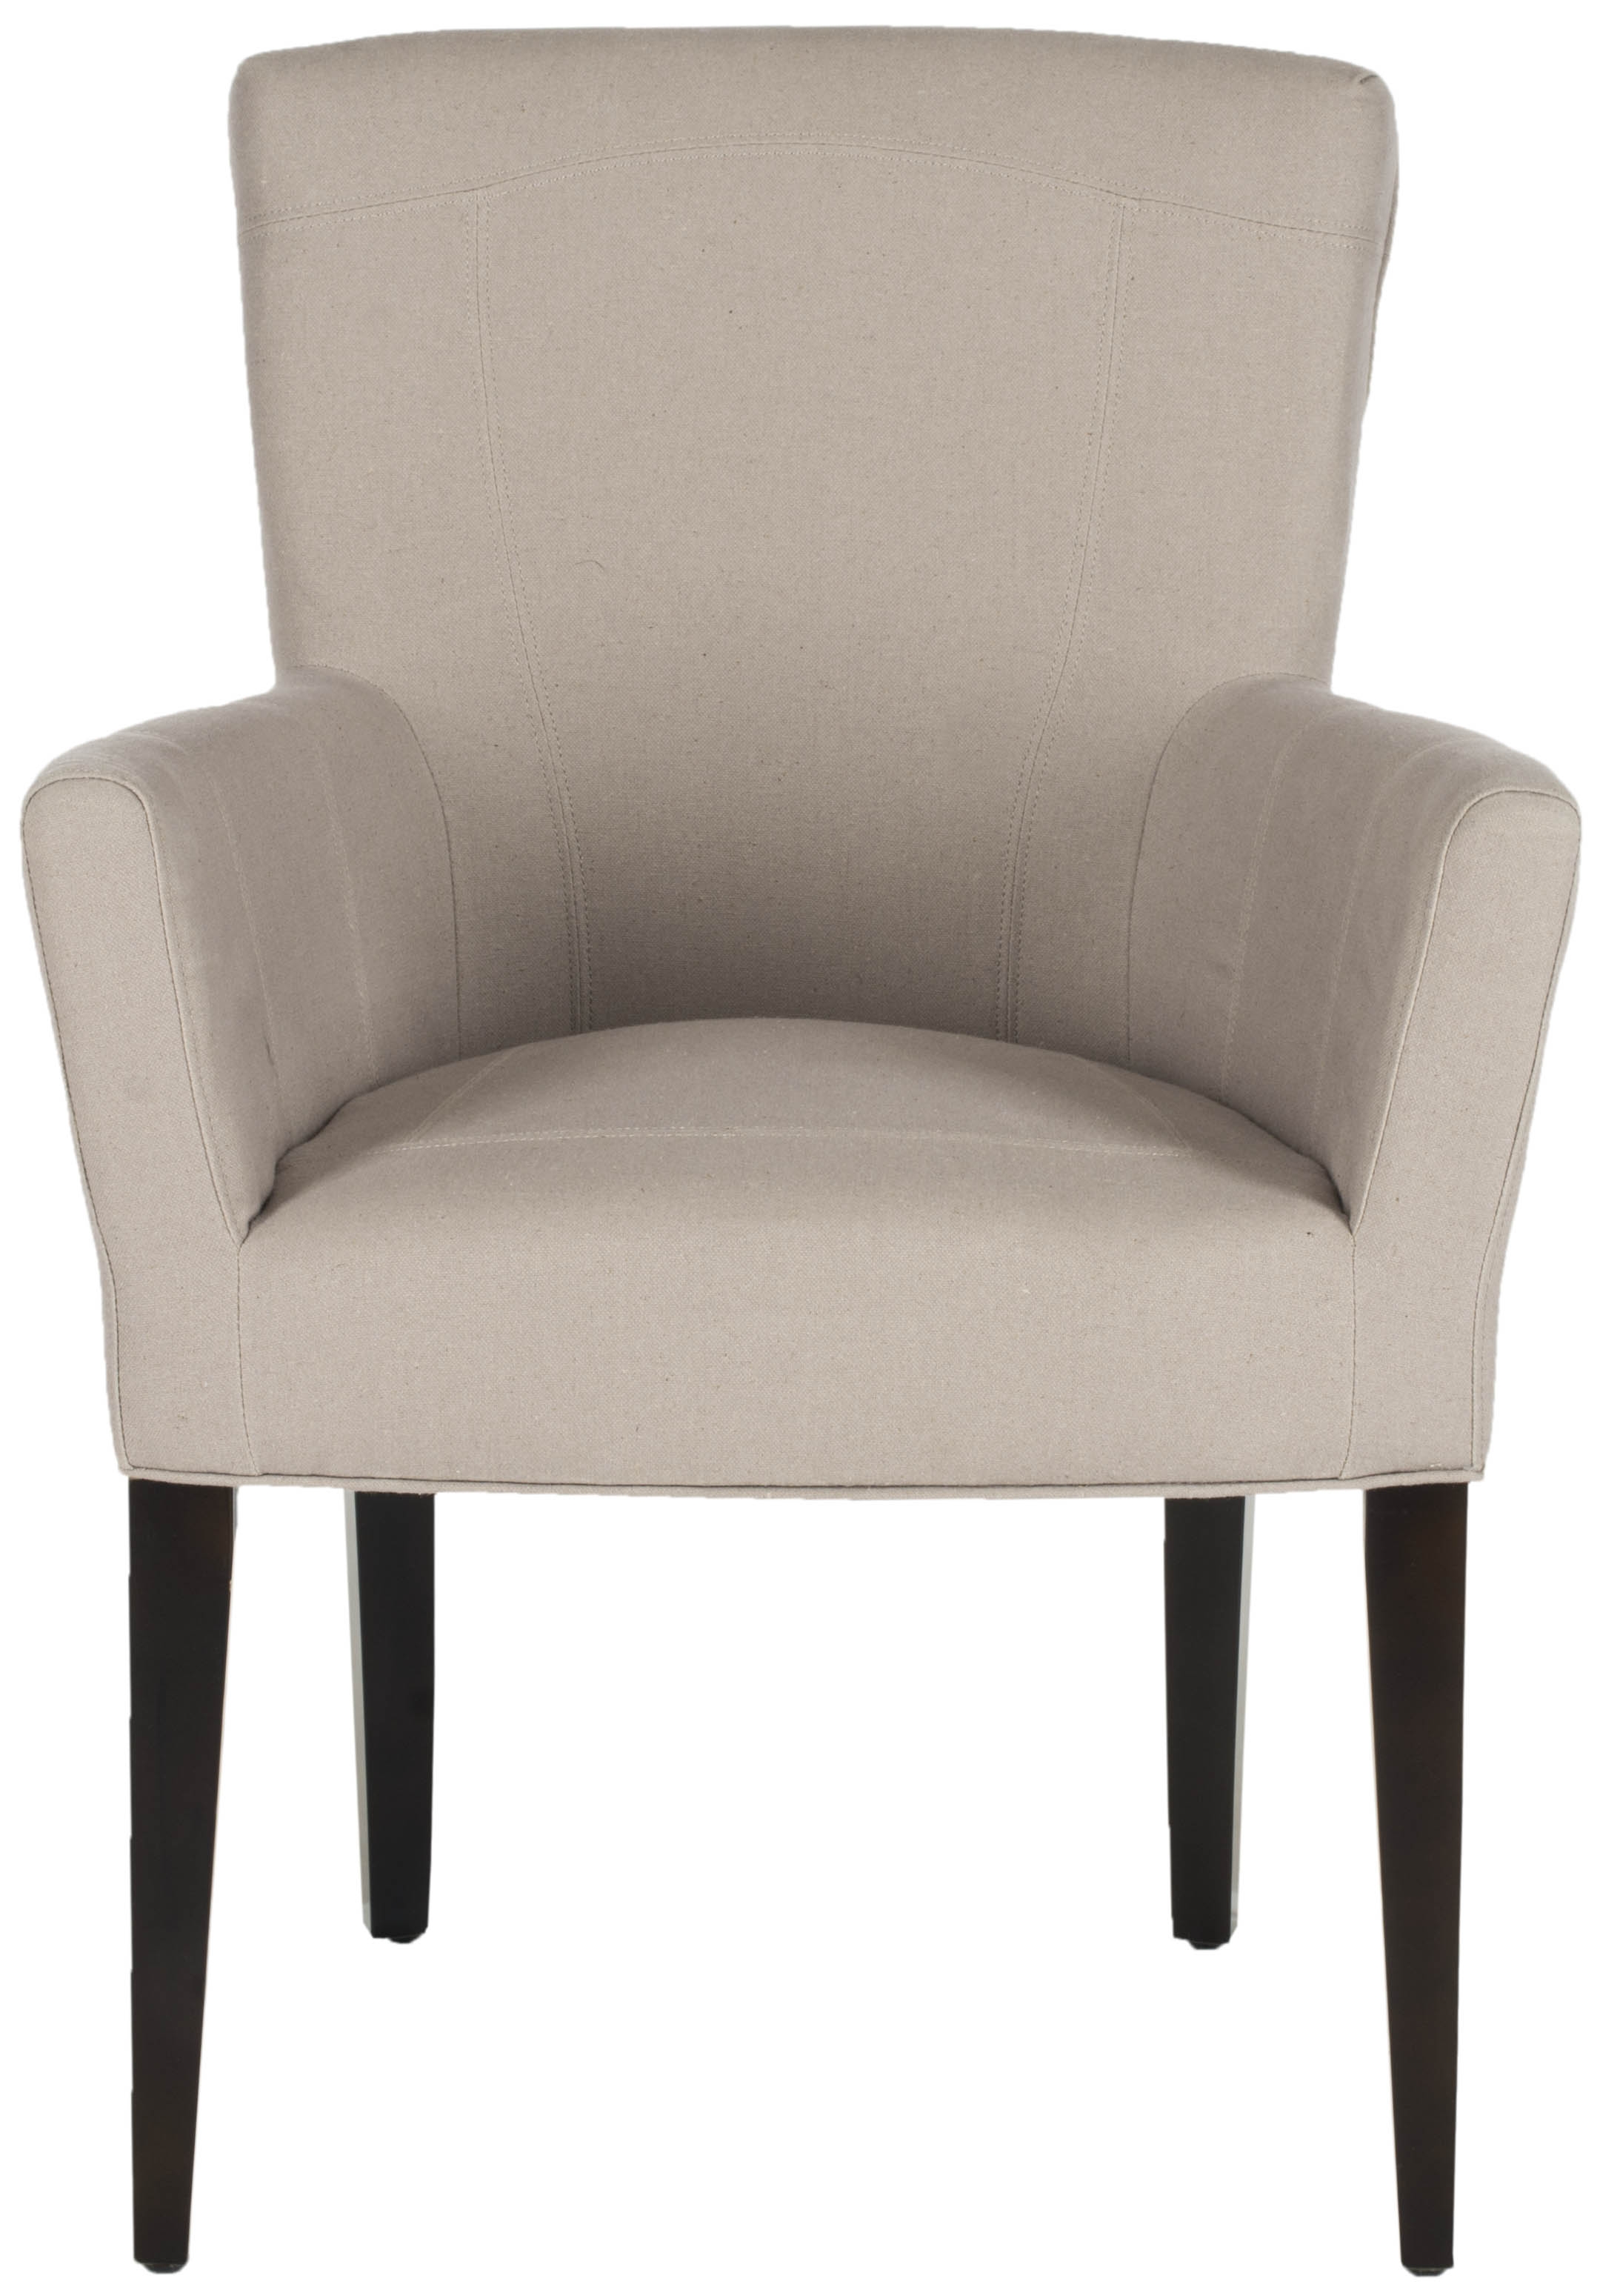 Dale Arm Chair - Taupe/Espresso - Safavieh - Image 0